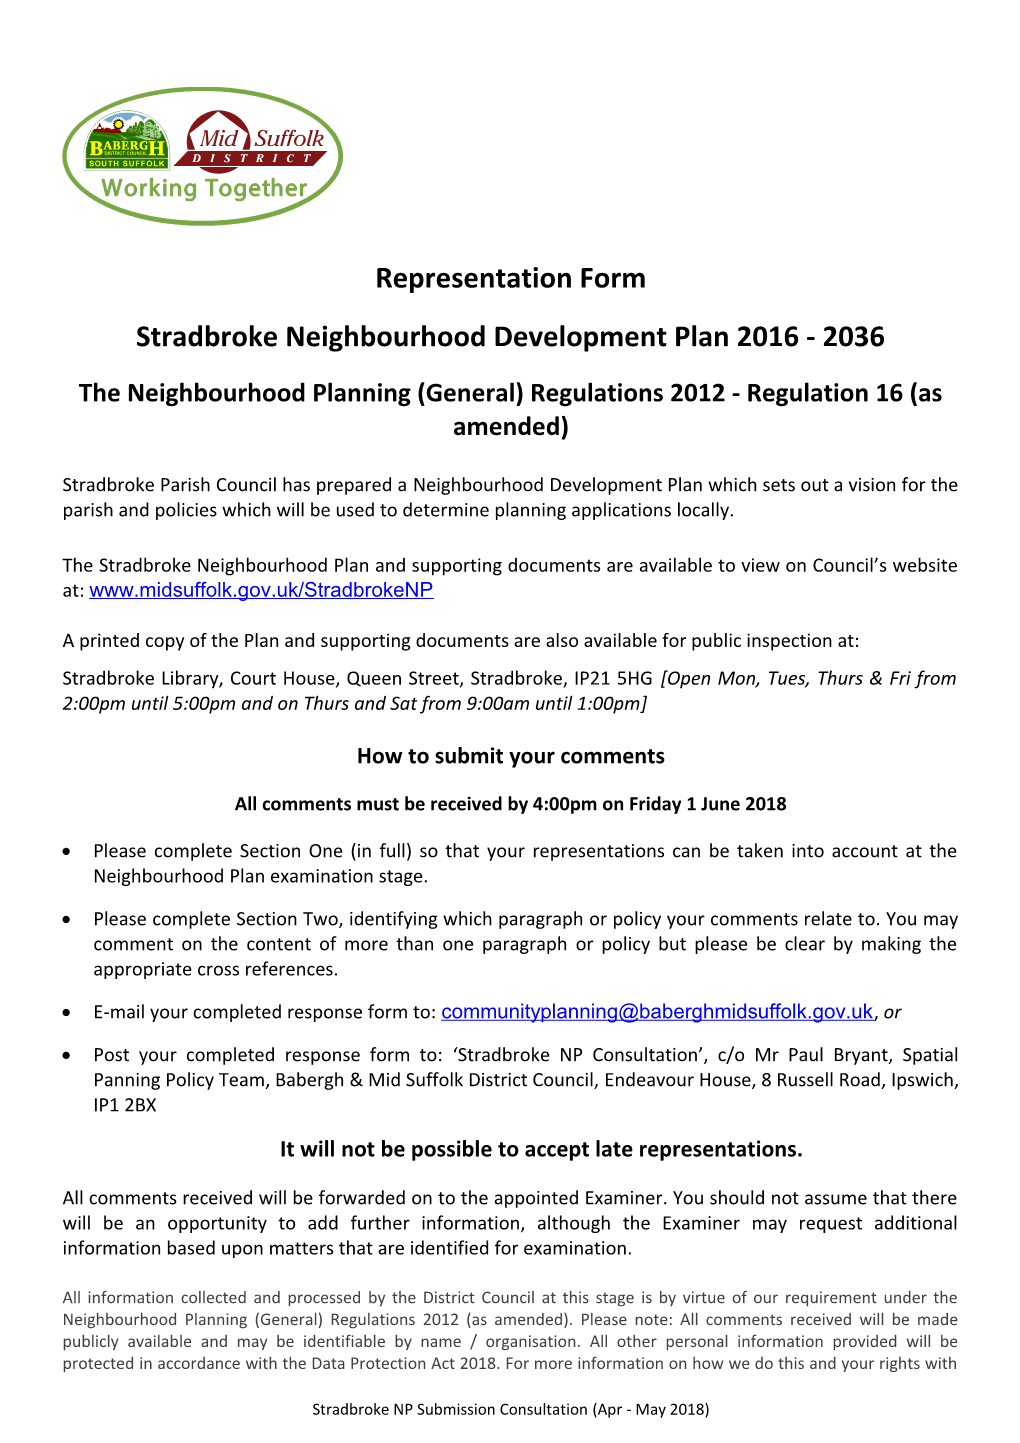 Stradbroke Neighbourhood Development Plan 2016-2036